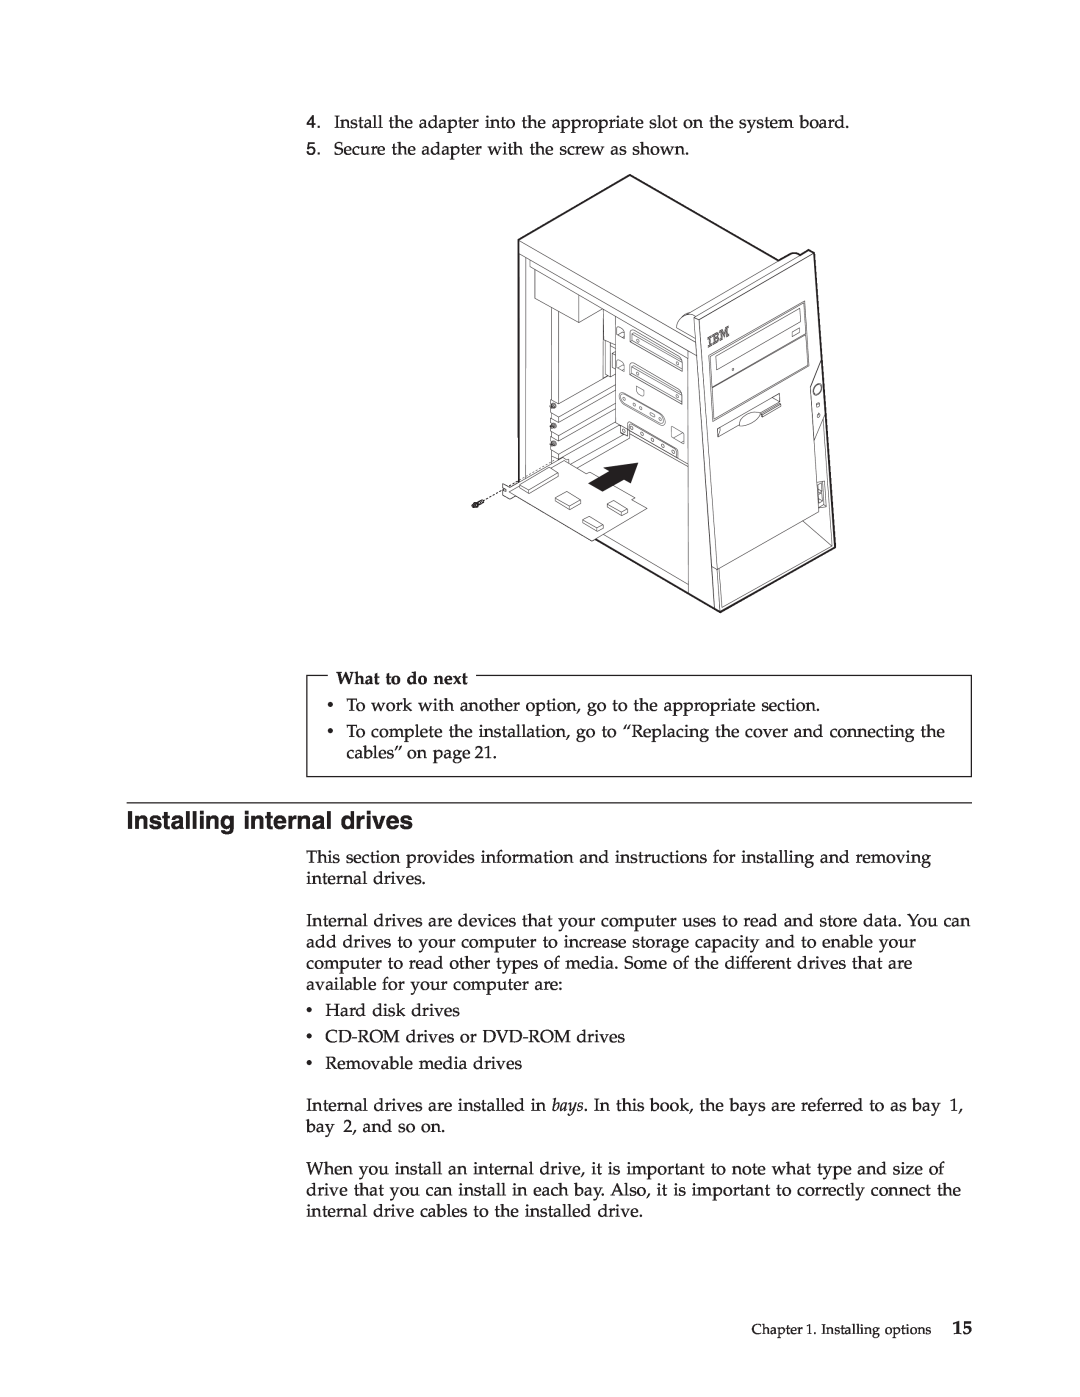 IBM 2289, 6824 manual Installing internal drives, What to do next 